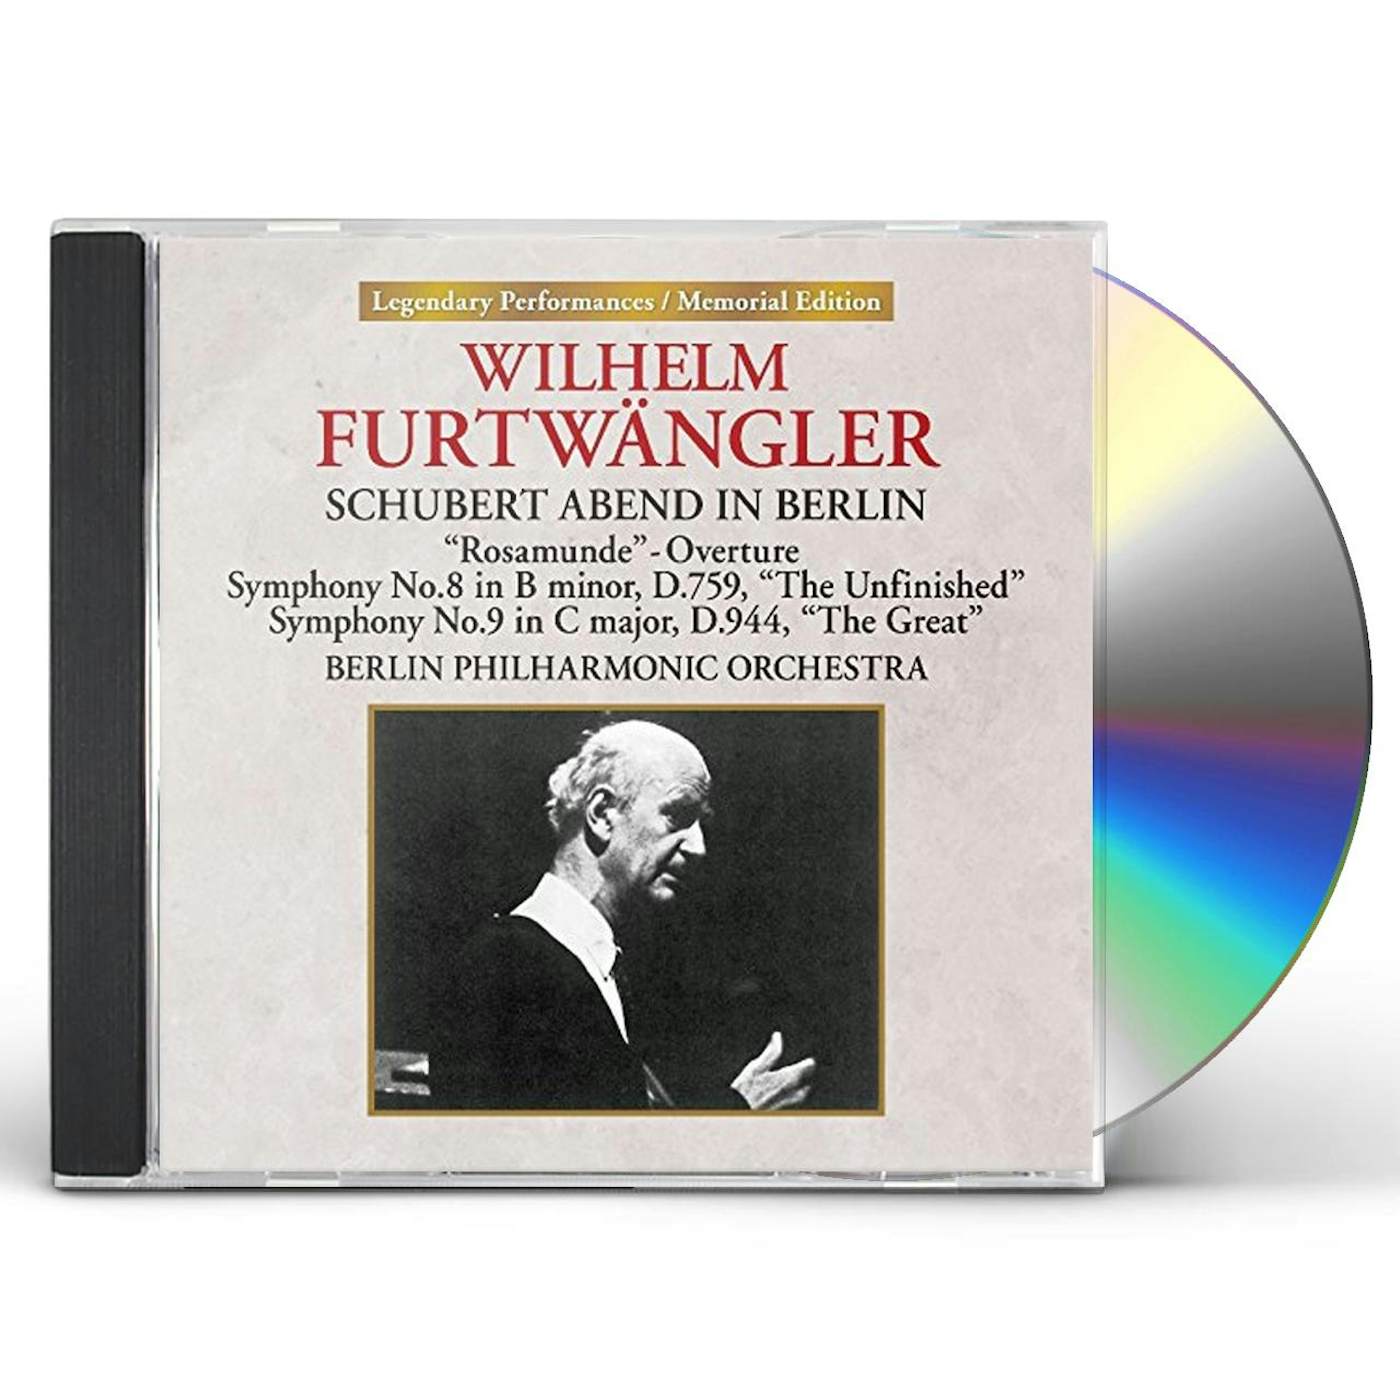 Wilhelm Furtwängler SCHUBERT ABEND IN BERLIN CD